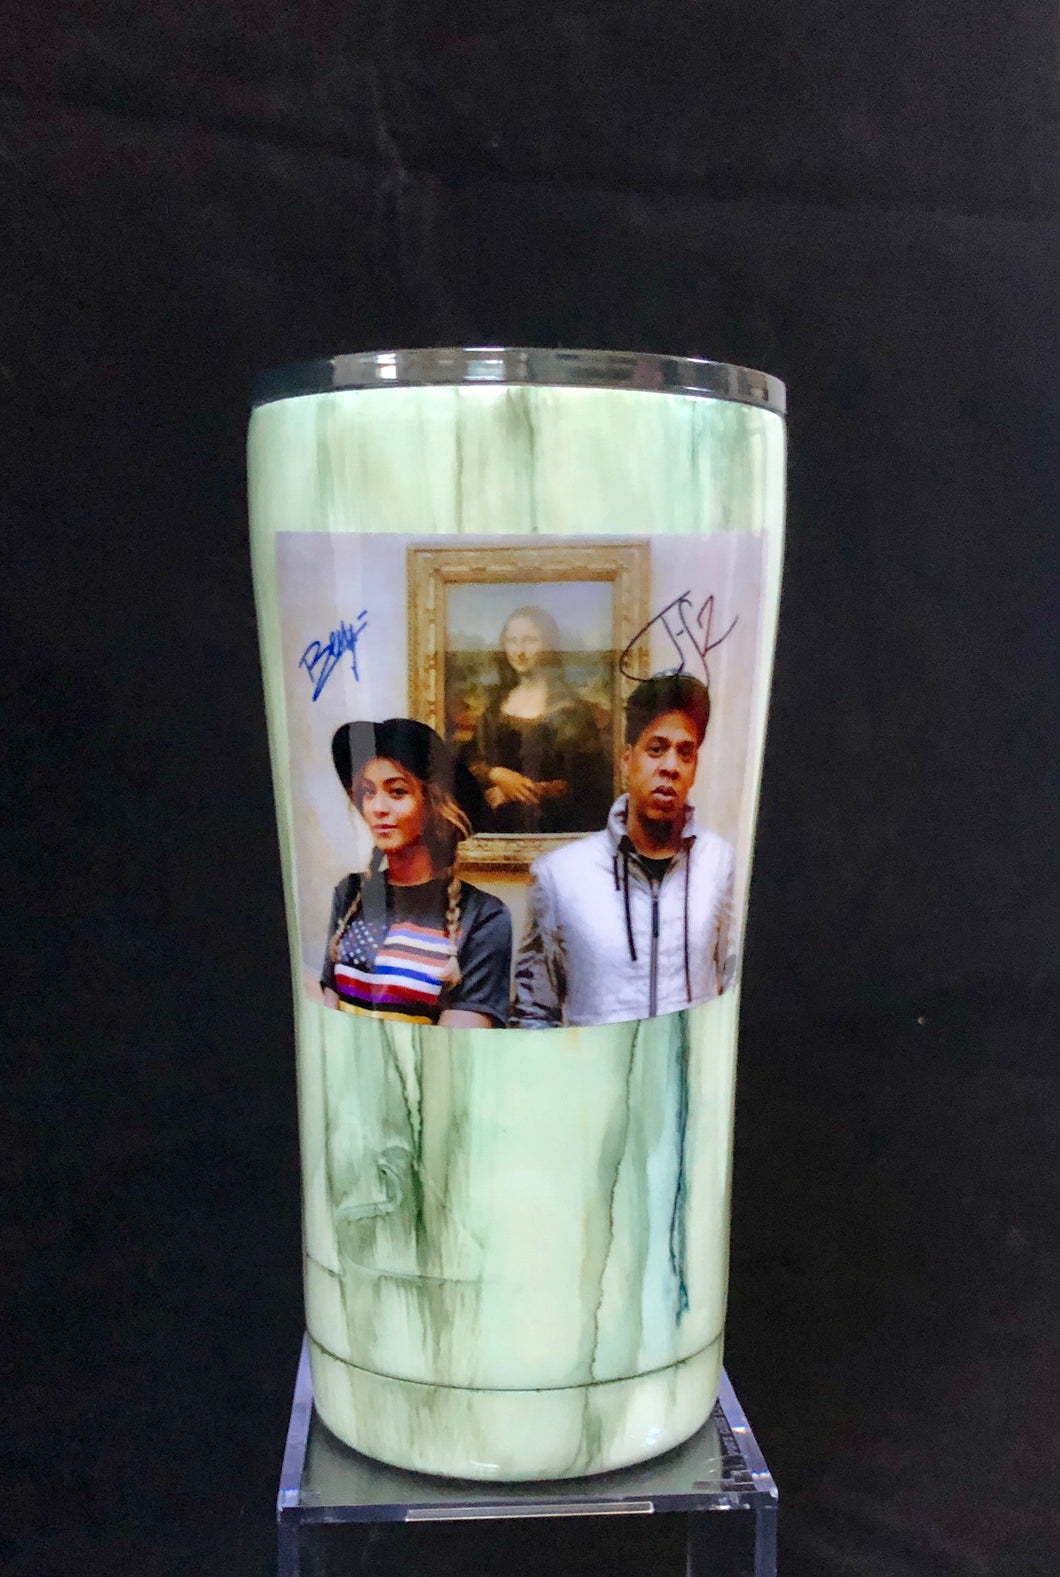 Beyonce & Jay-Z Autograph RP Custom Tumbler 20oz - One Of A Kind